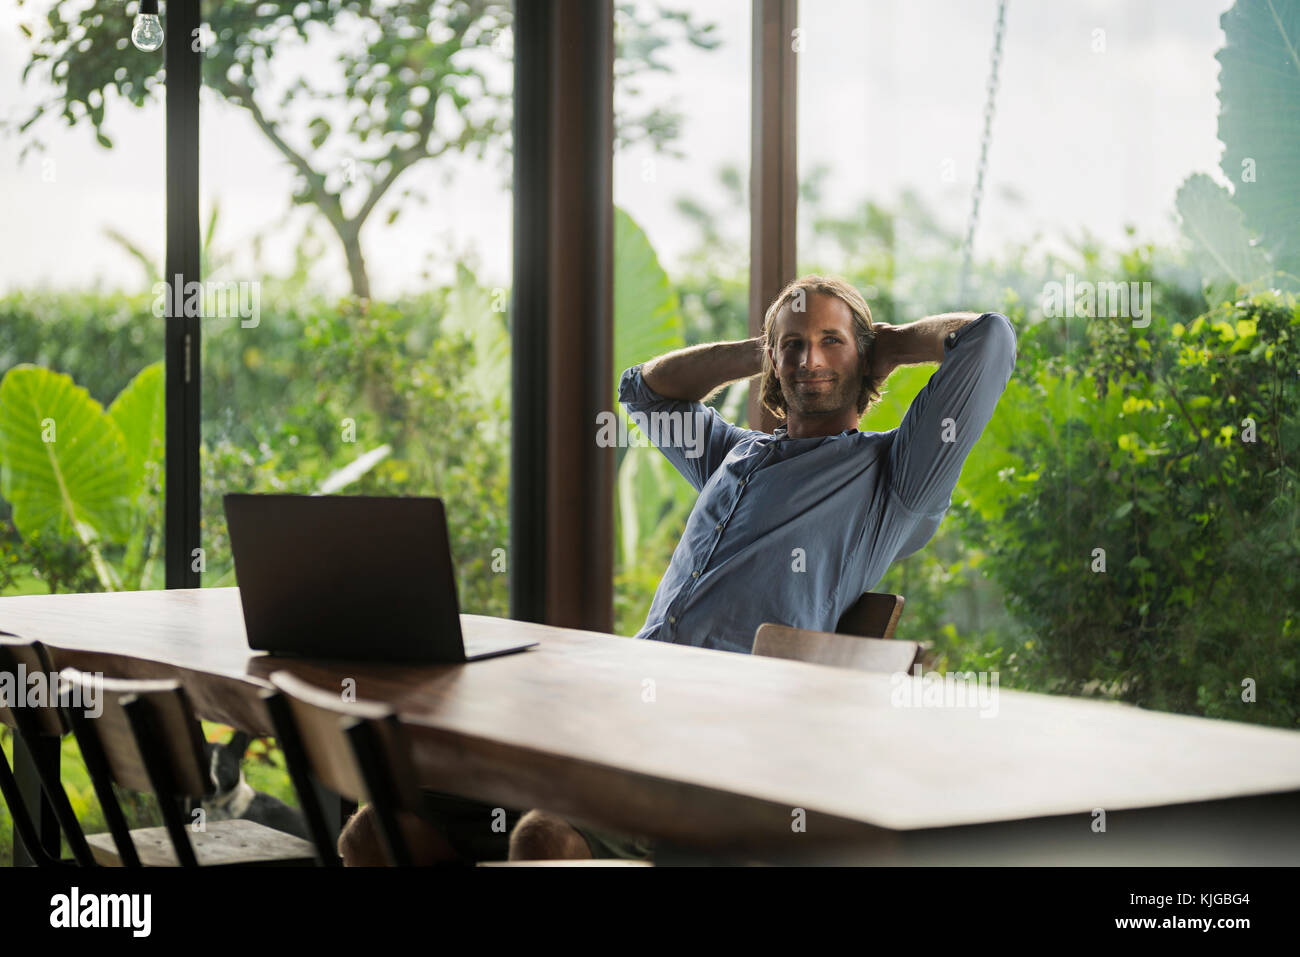 Handsome man with laptop sitting at table moderne en bois, de style moderne, chambre Banque D'Images